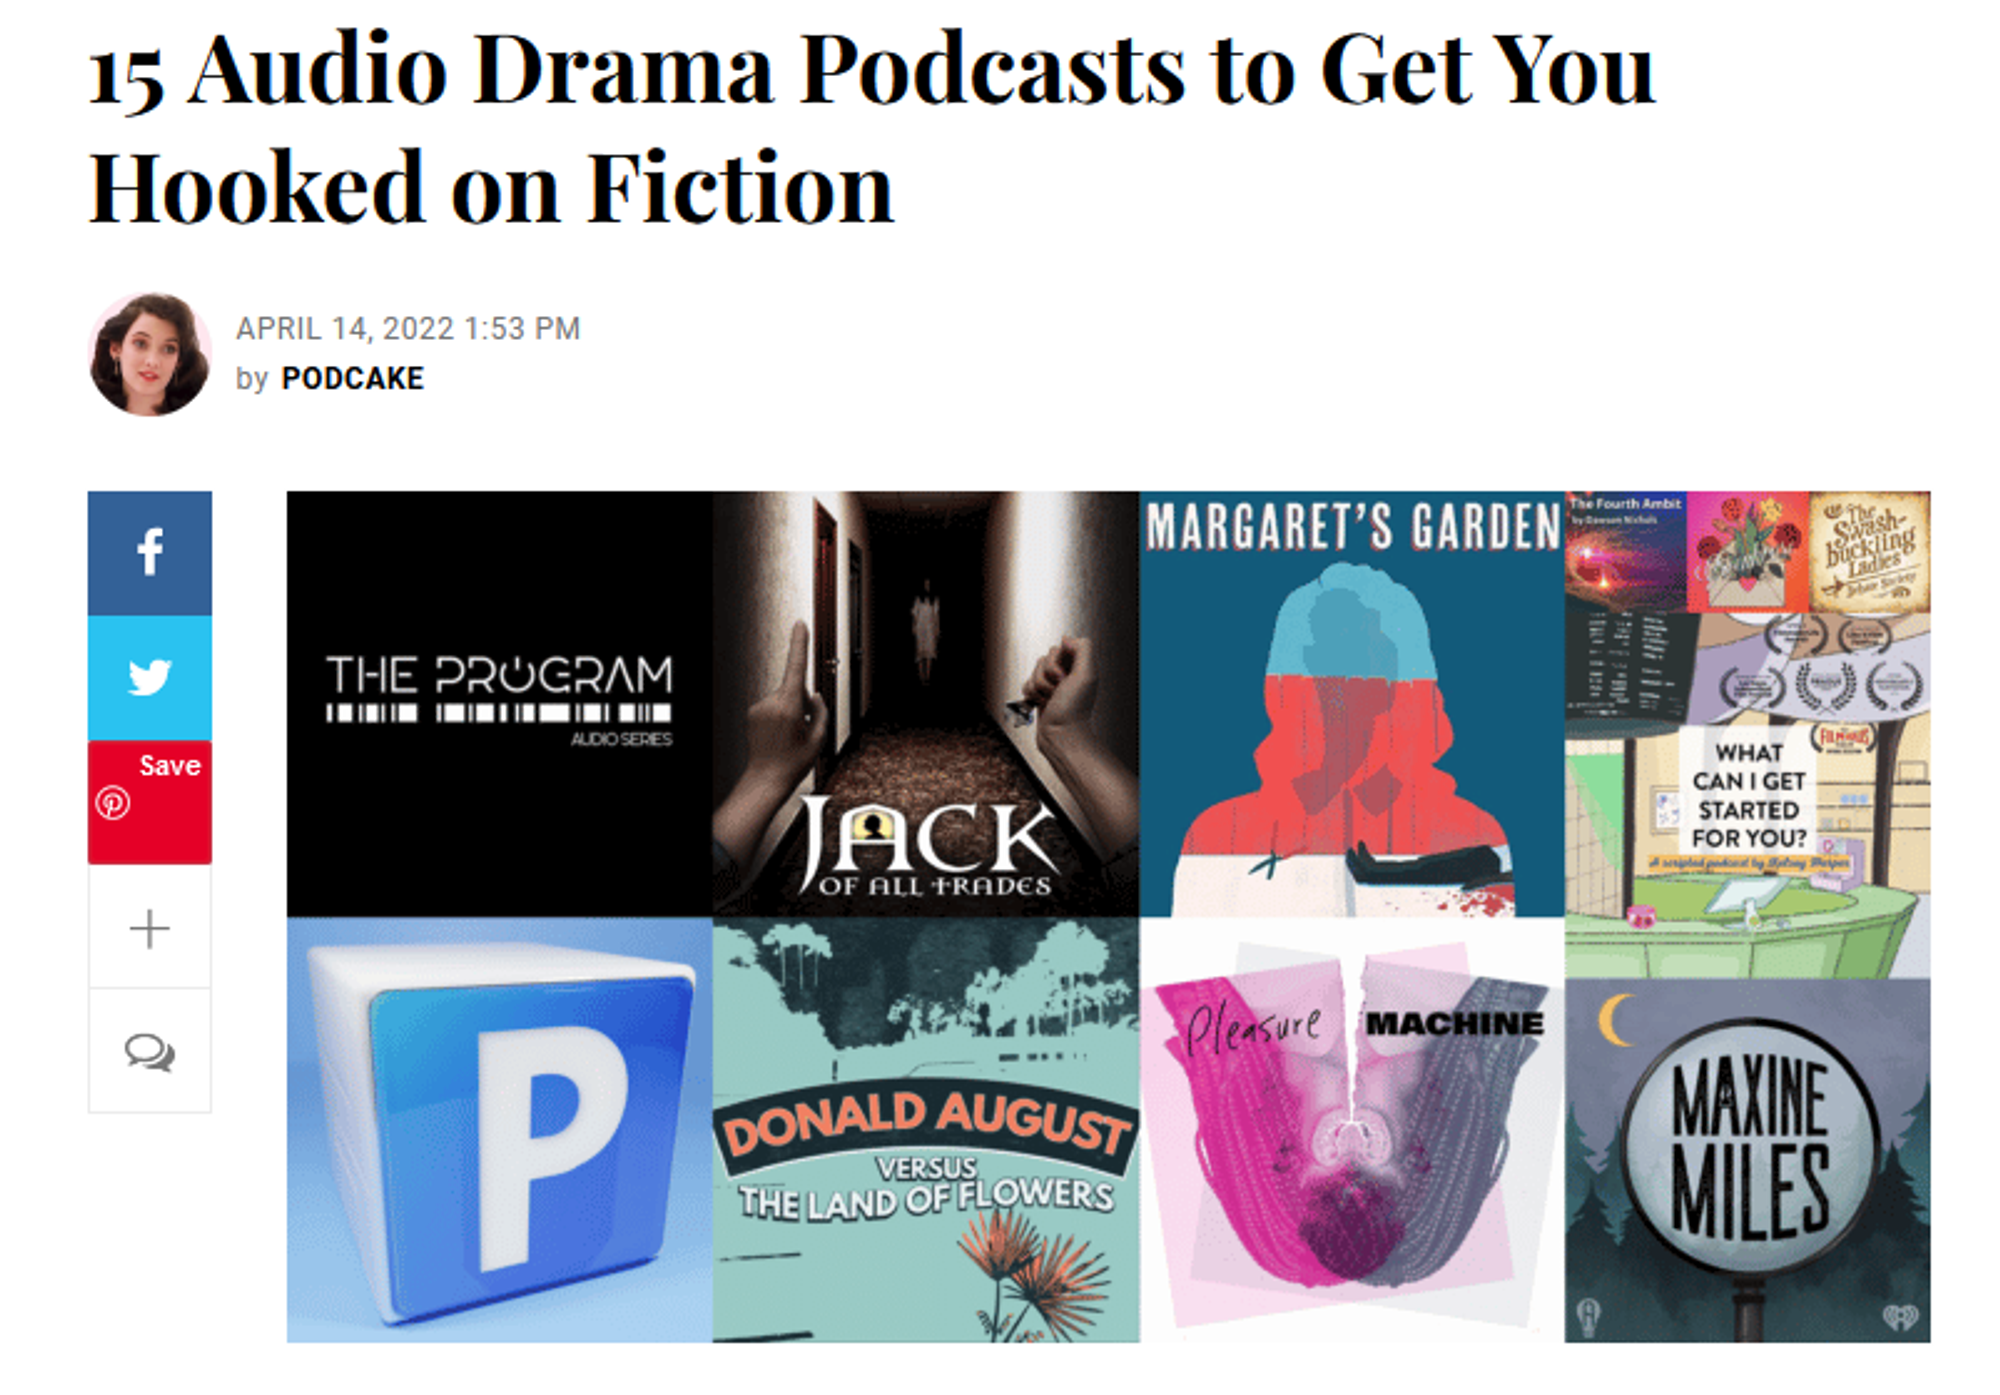 https://discoverpods.com/audio-drama-podcasts-fiction/